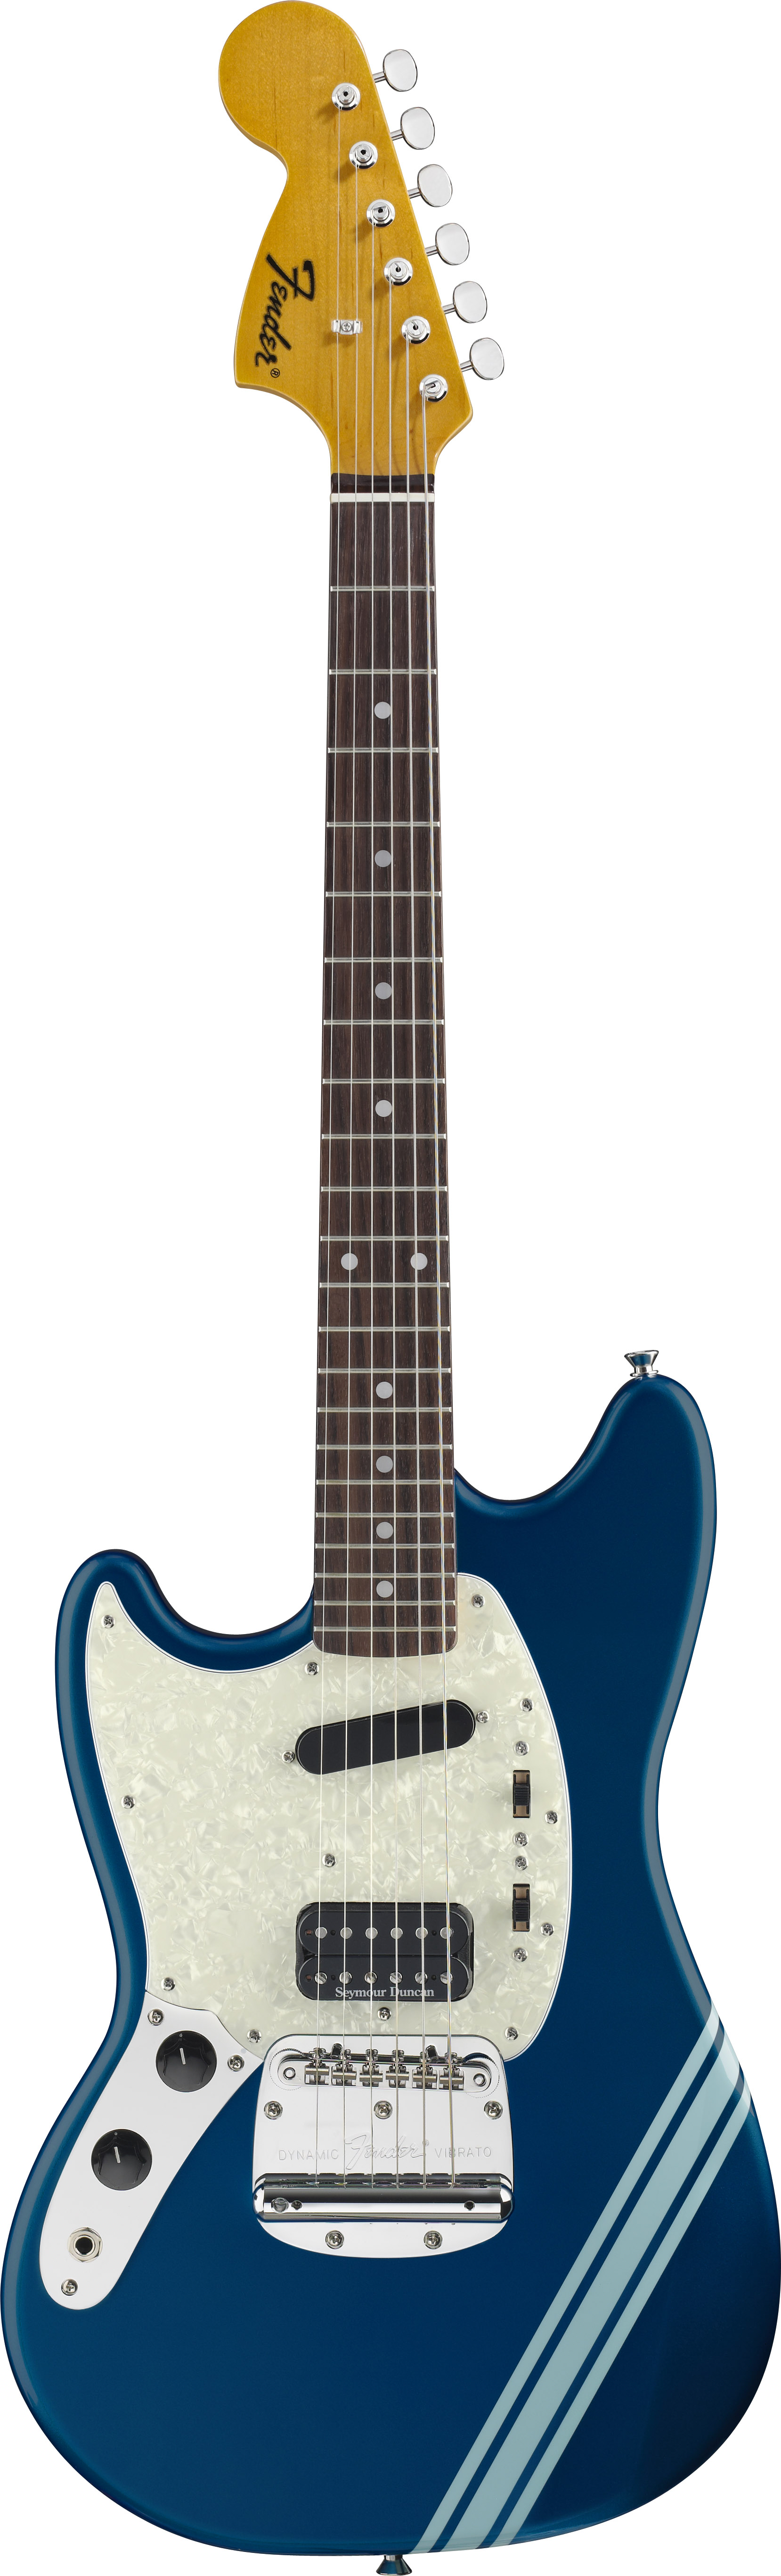 Fender Fender Kurt Cobain Mustang Left-Handed Electric Guitar - Fiesta Red